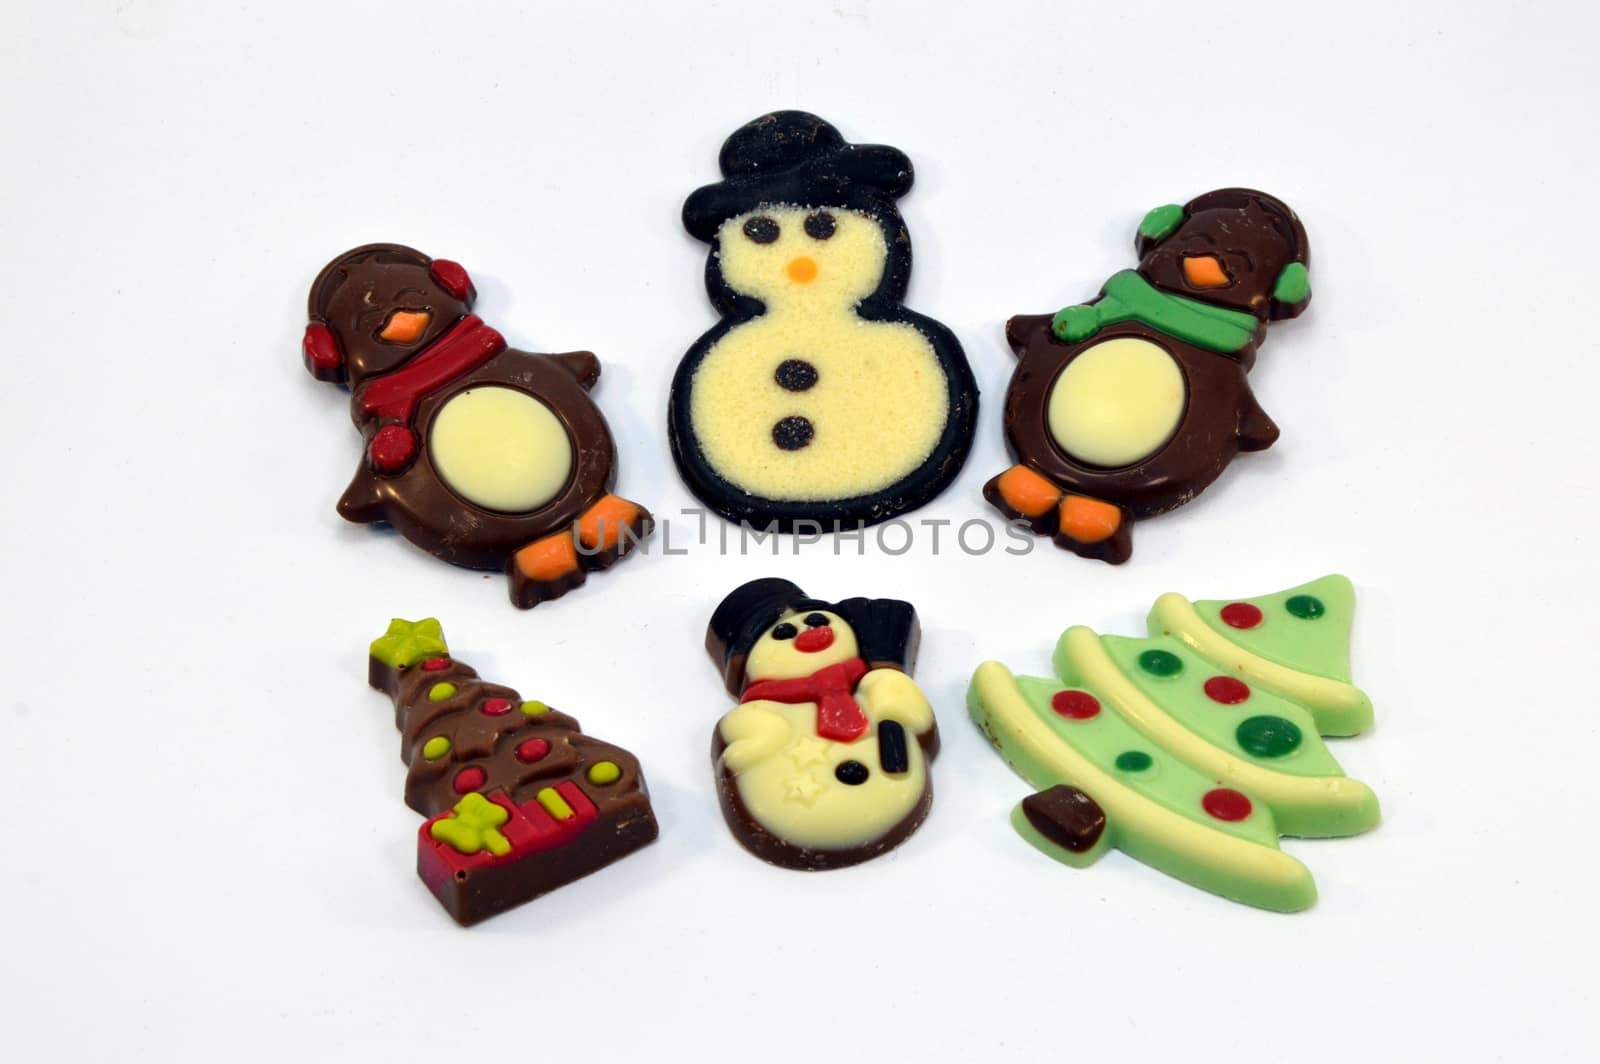 Six Belgian chocolates representing Christmas figurines